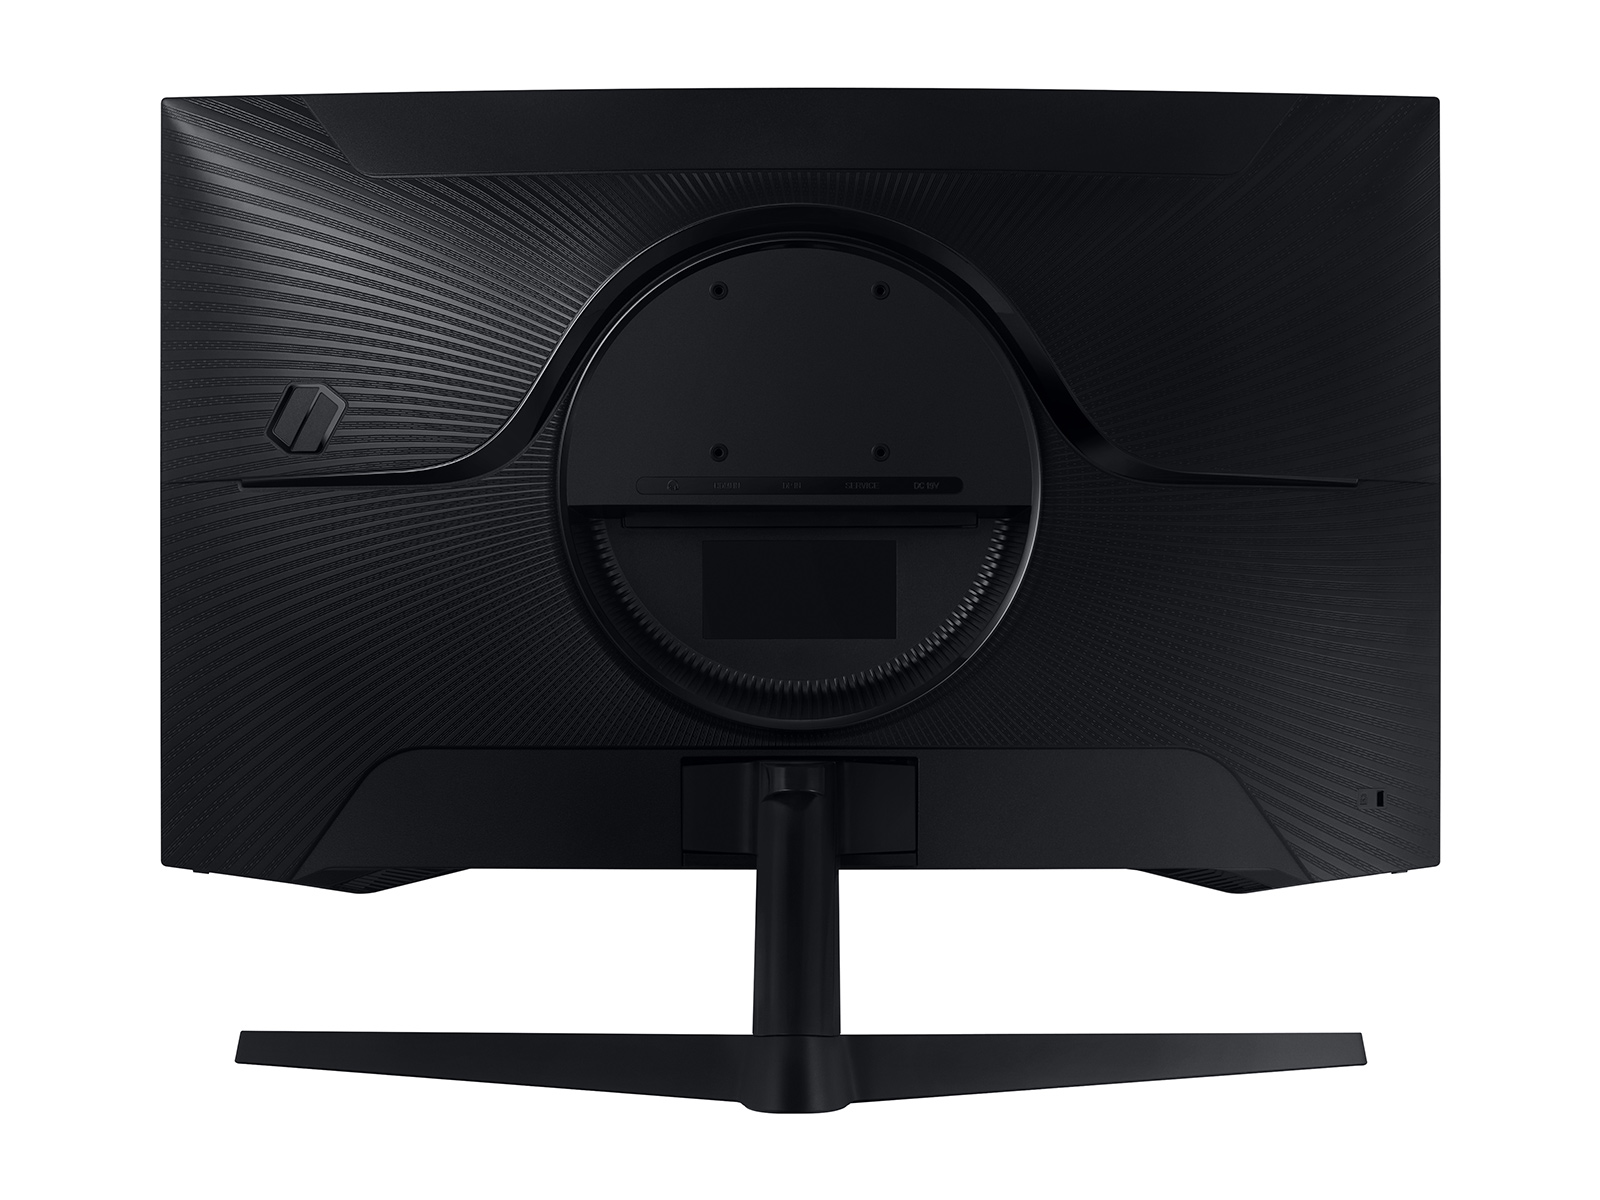 34 Odyssey G55T 1000R 1ms(MPRT) Curved Gaming Monitor - LC34G55TWWNXZA